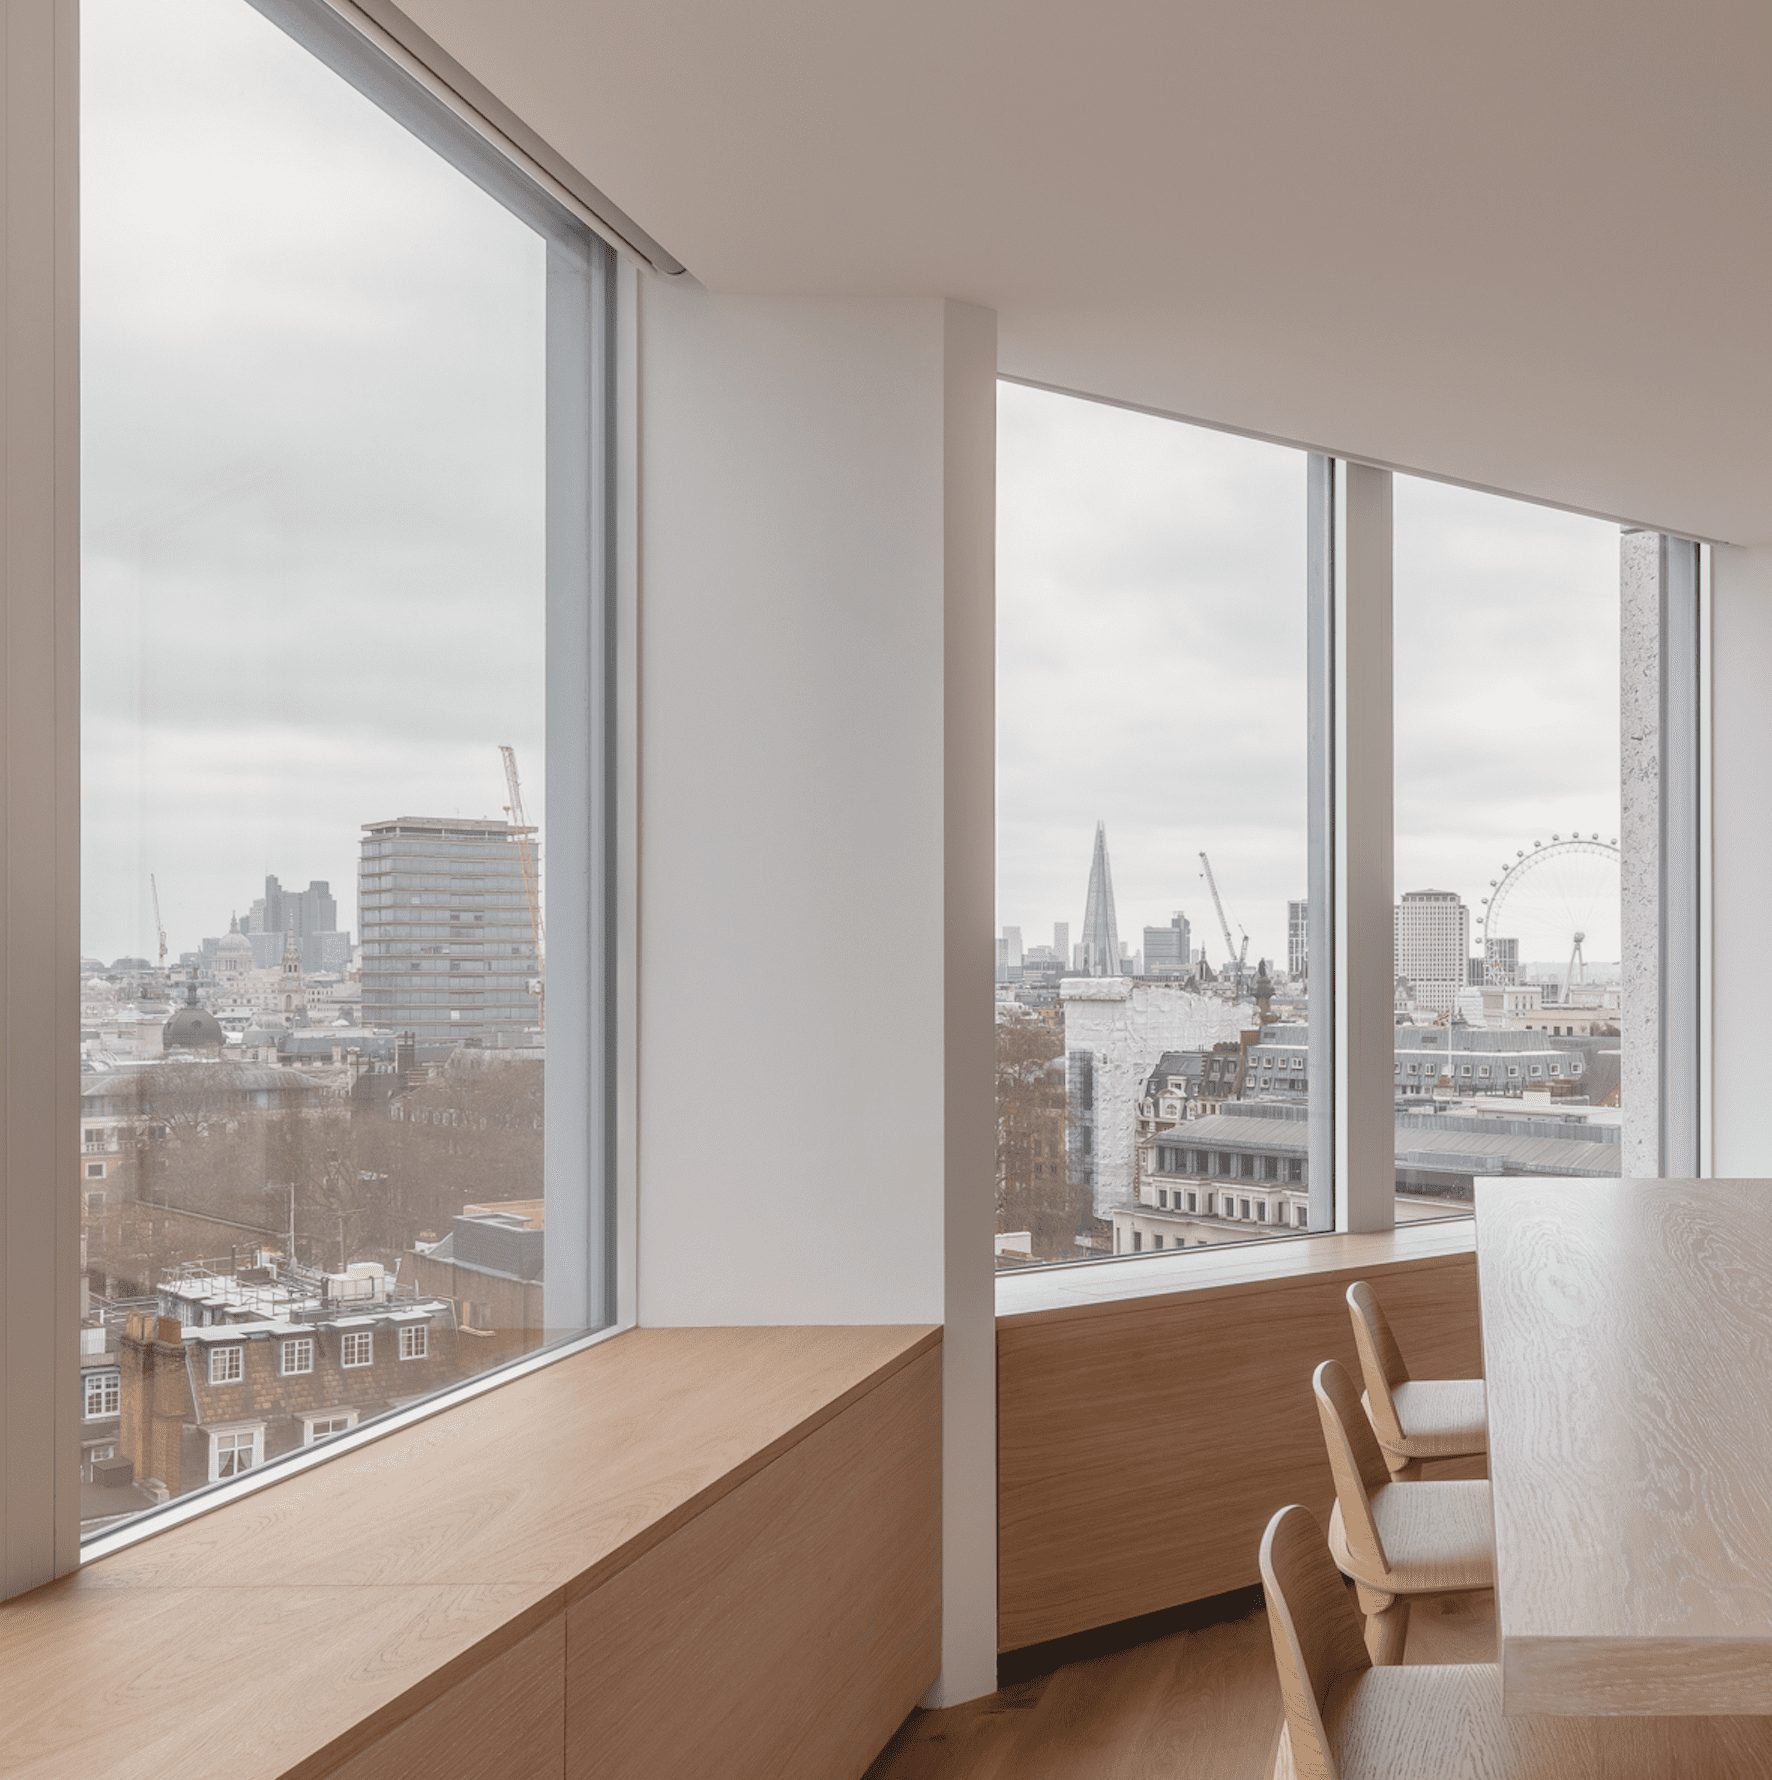 ConForm Architects, London, Smithson Tower, minimalist interior, minimalist office, workspace interiors, office interiors, OnOffice magazine